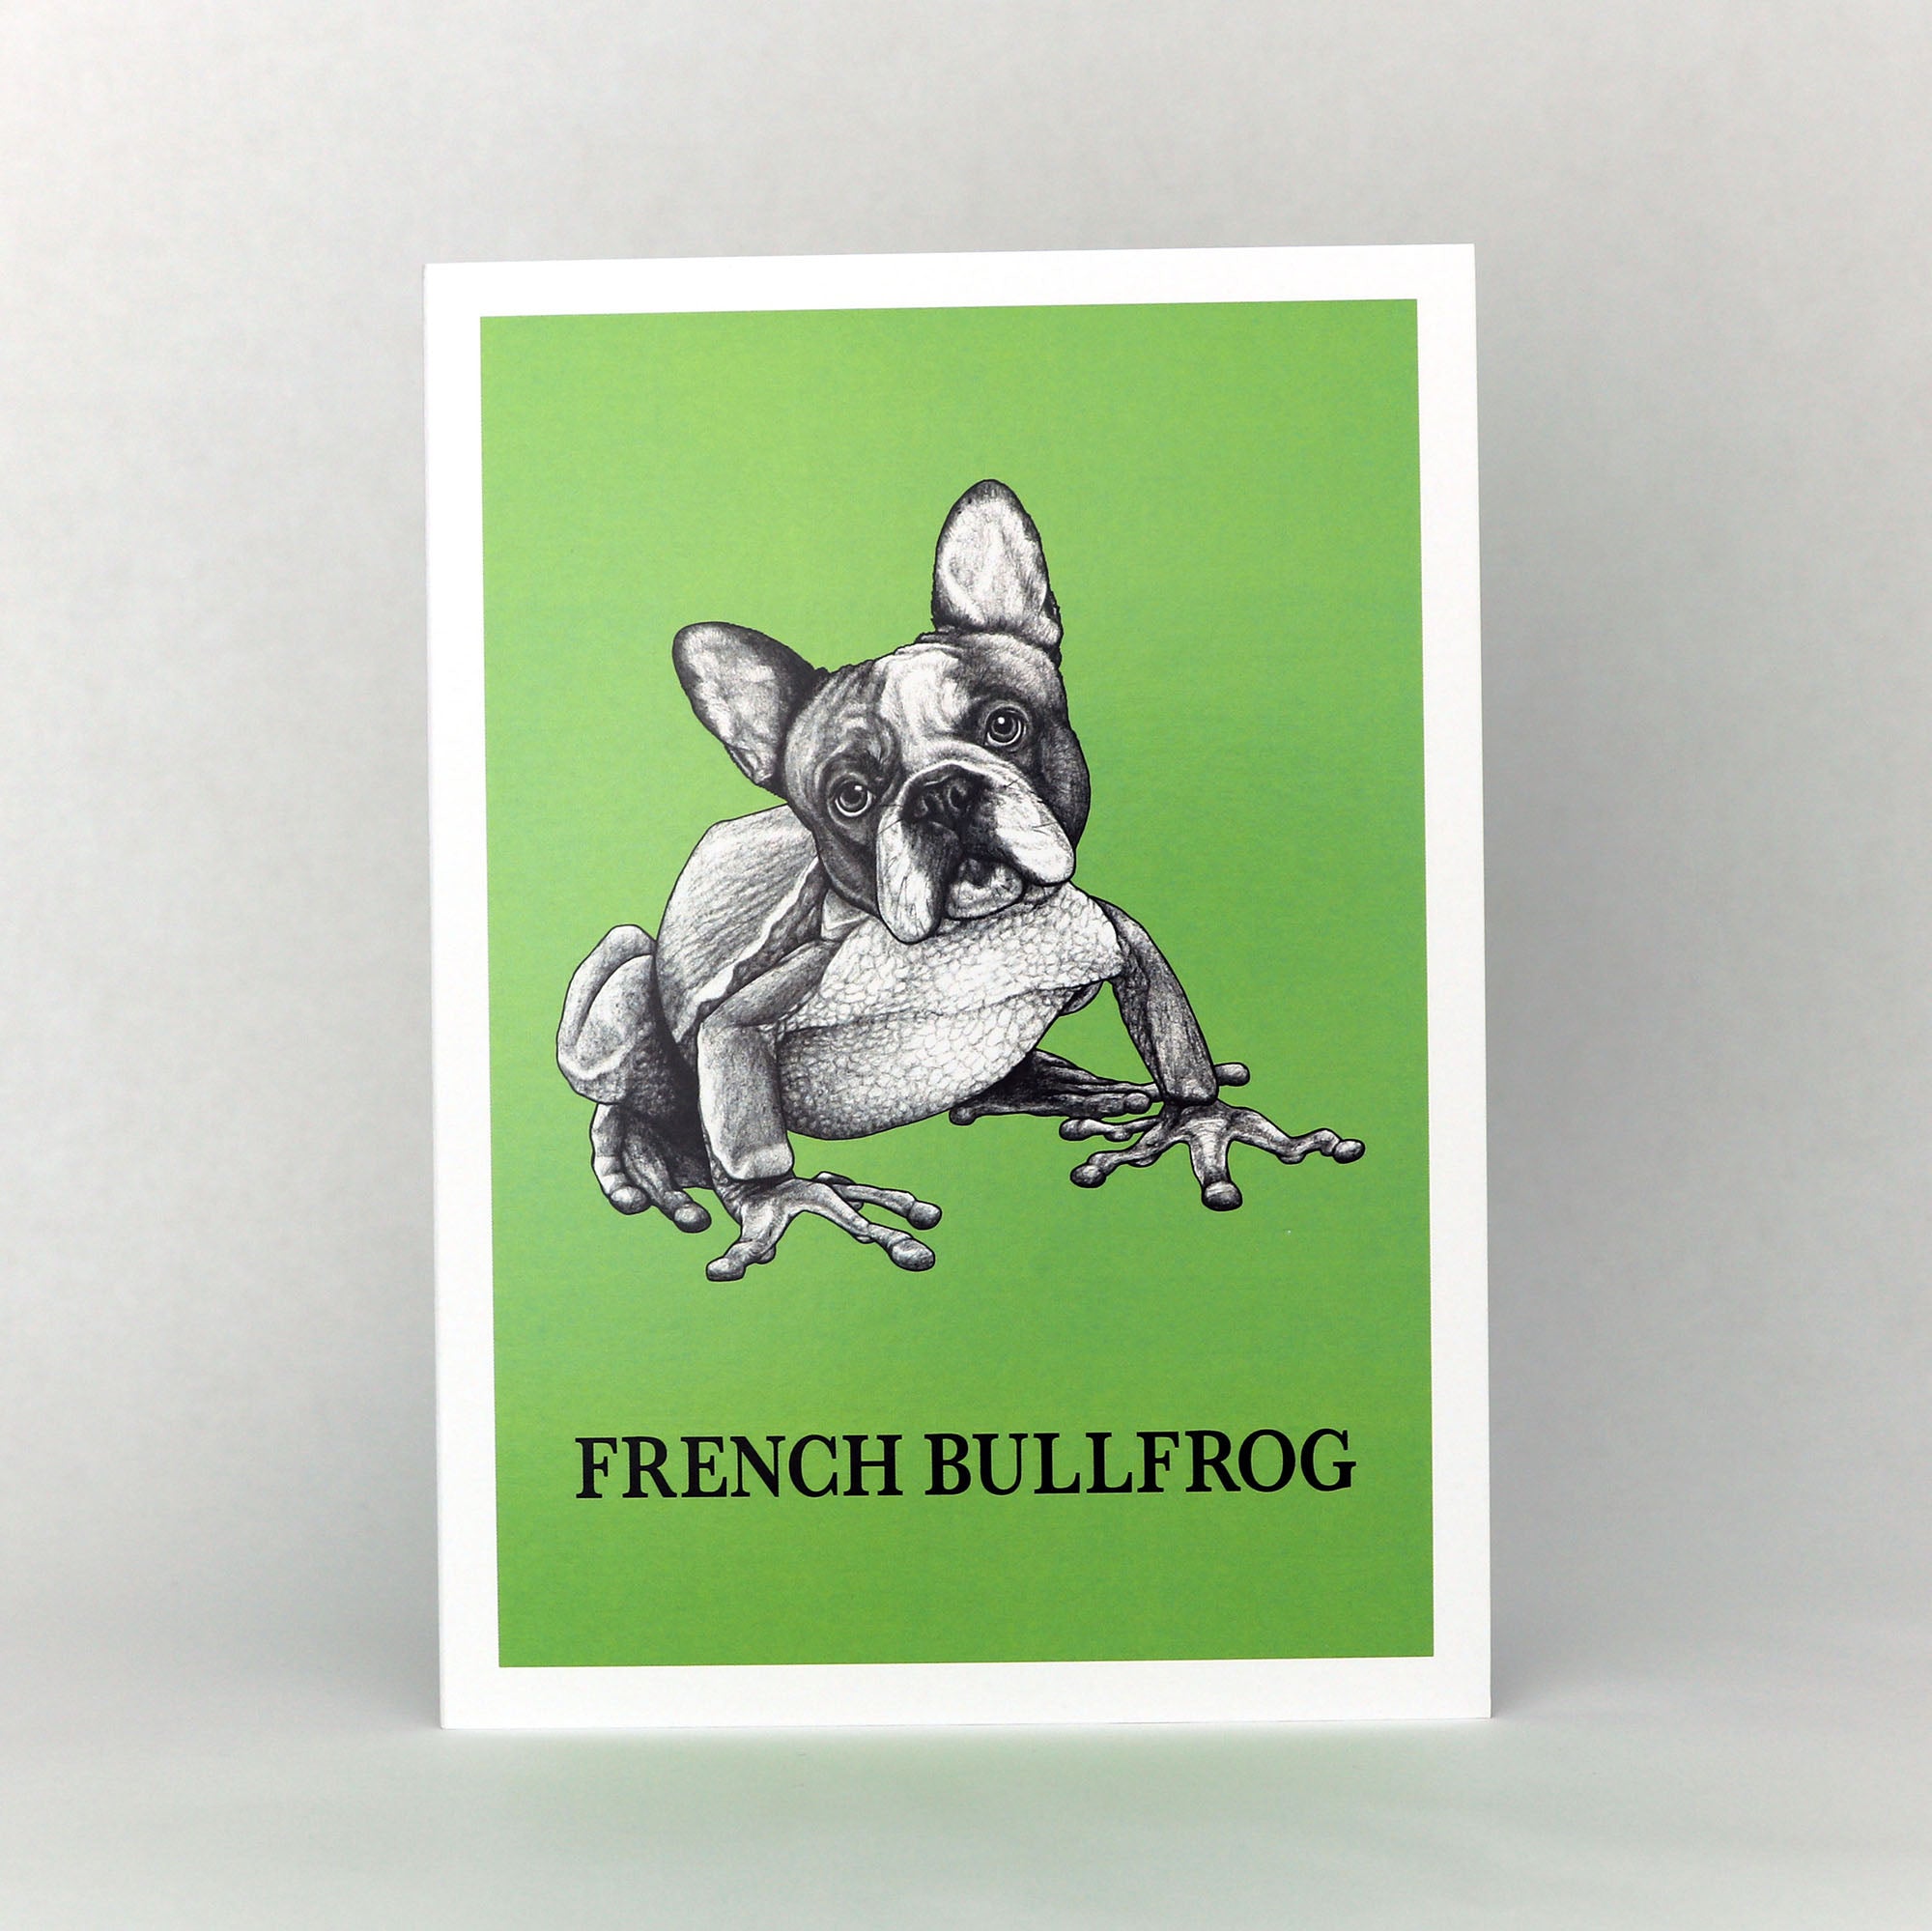 French Bullfrog | French Bulldog + Frog Hybrid Animal | 5x7" Greeting Card